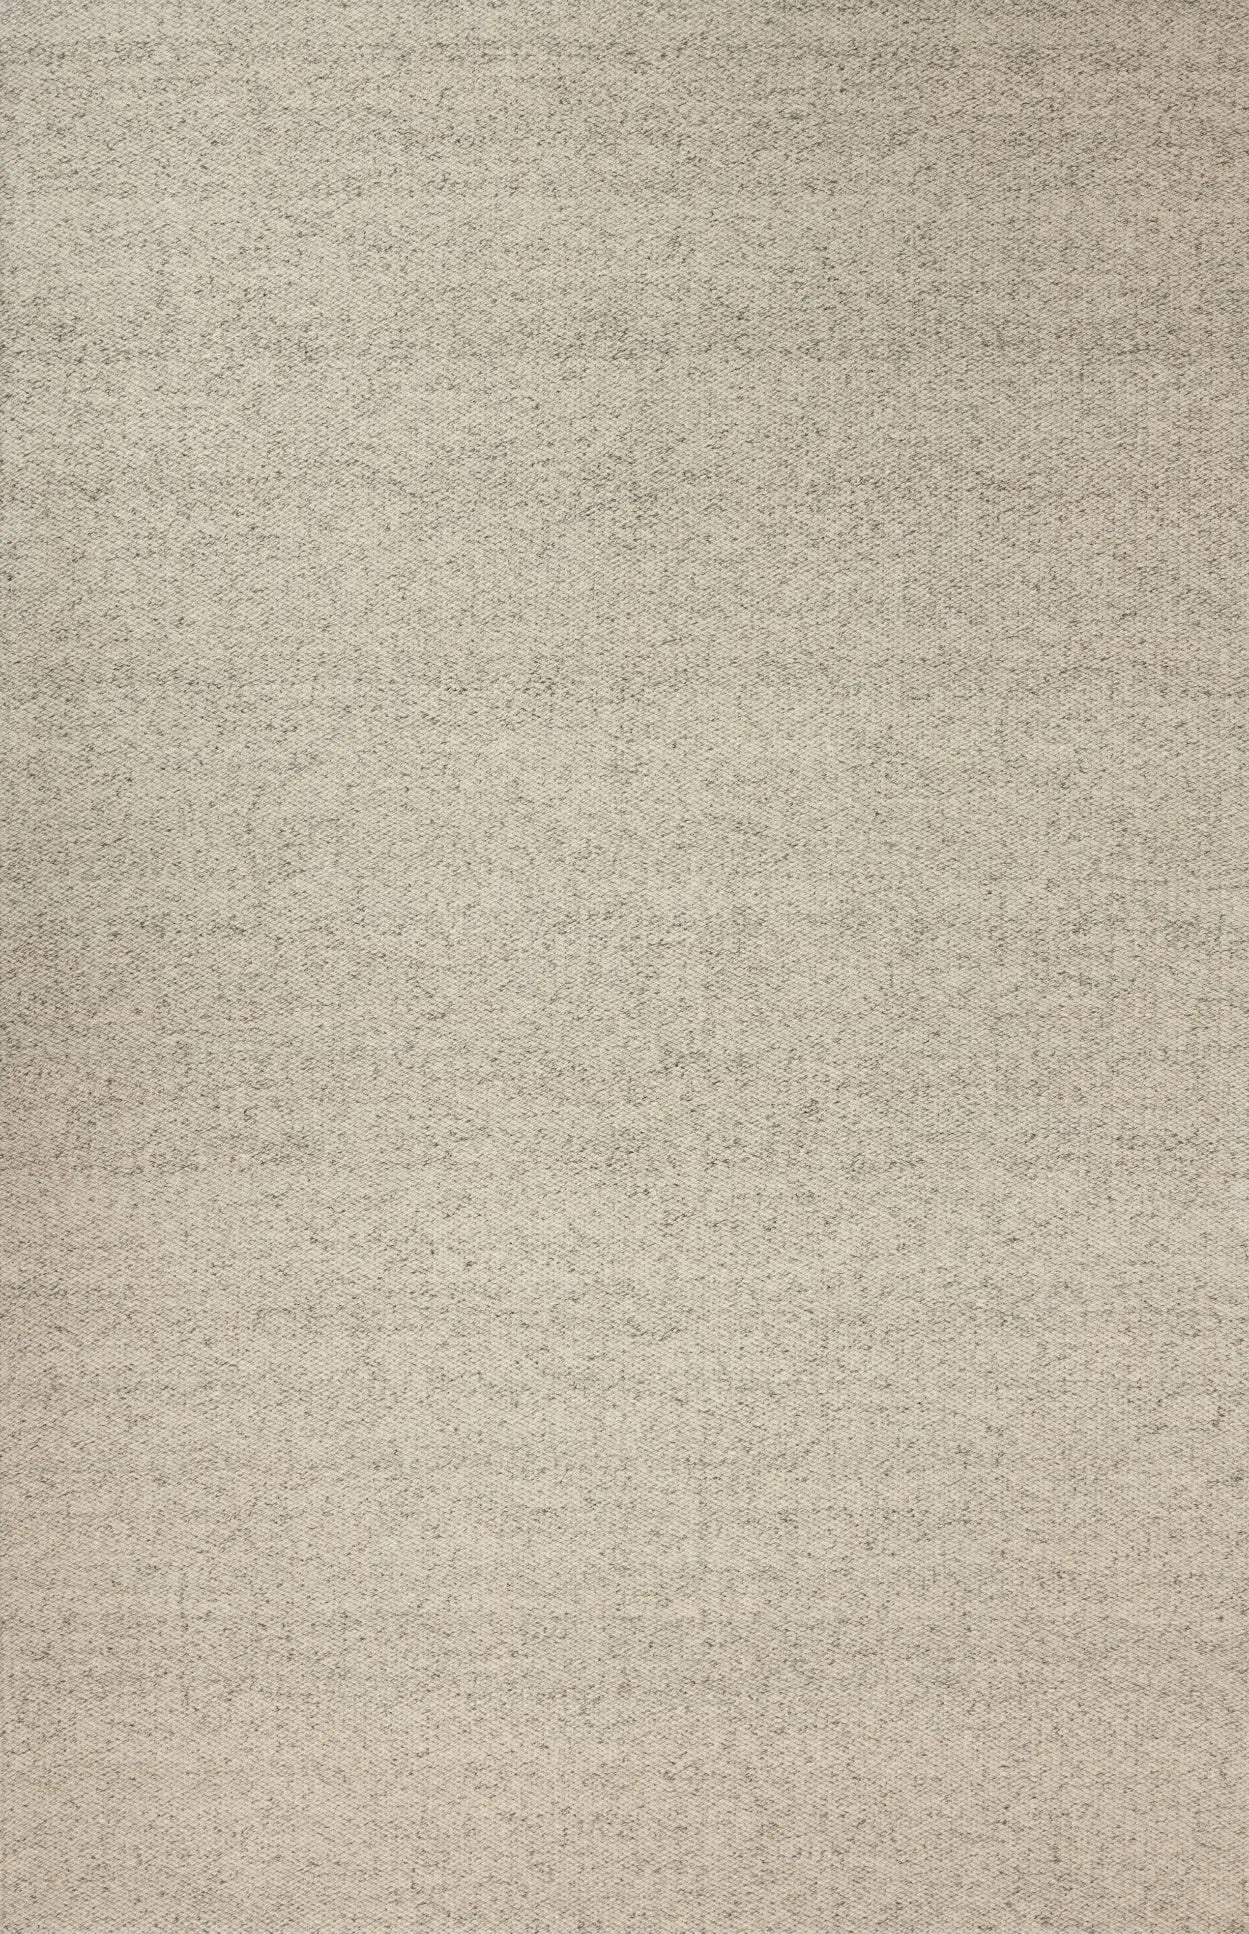 Twisted Wool Marle Grey Sample - NODI HANDMADE RUGS